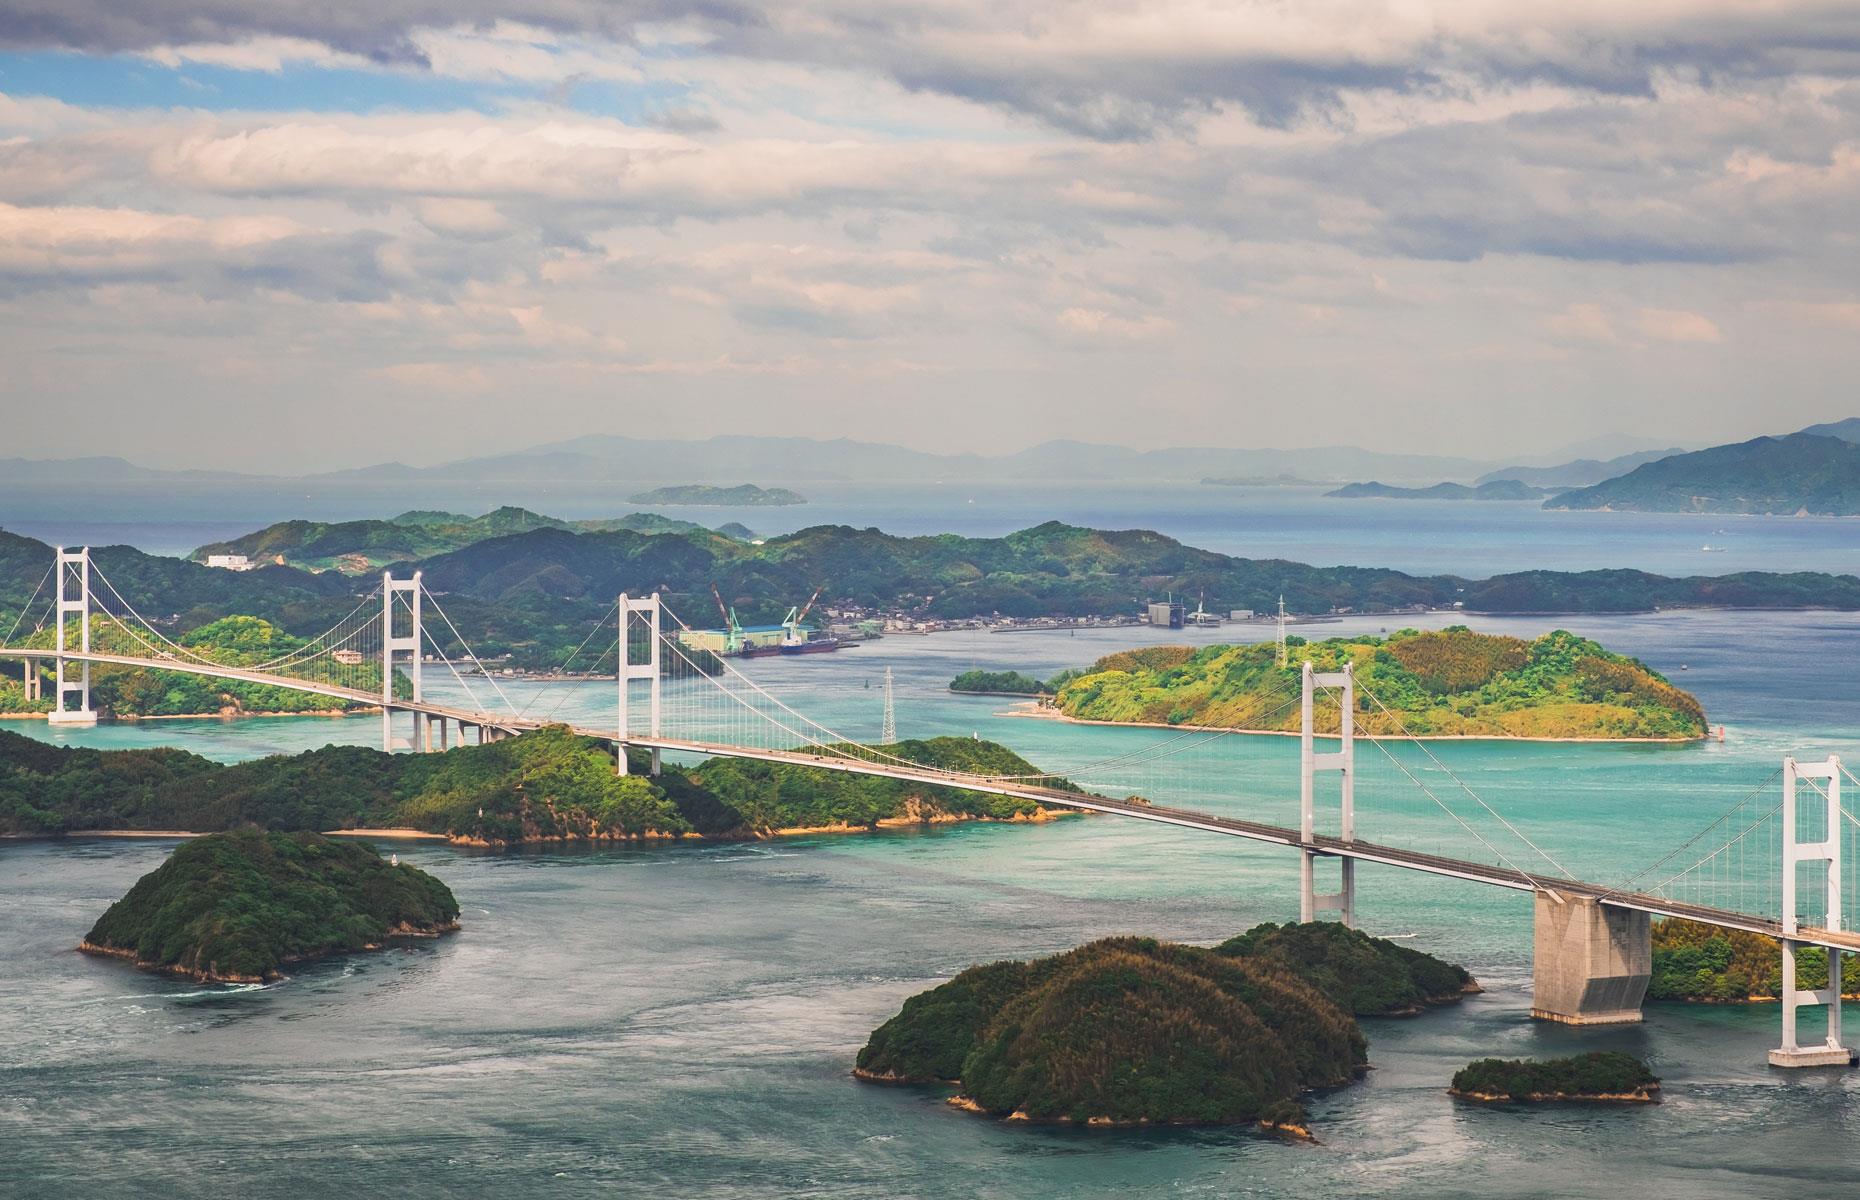 Honshu-Shikoku Bridge Project, Japan: $76.9 billion (£54.4bn)